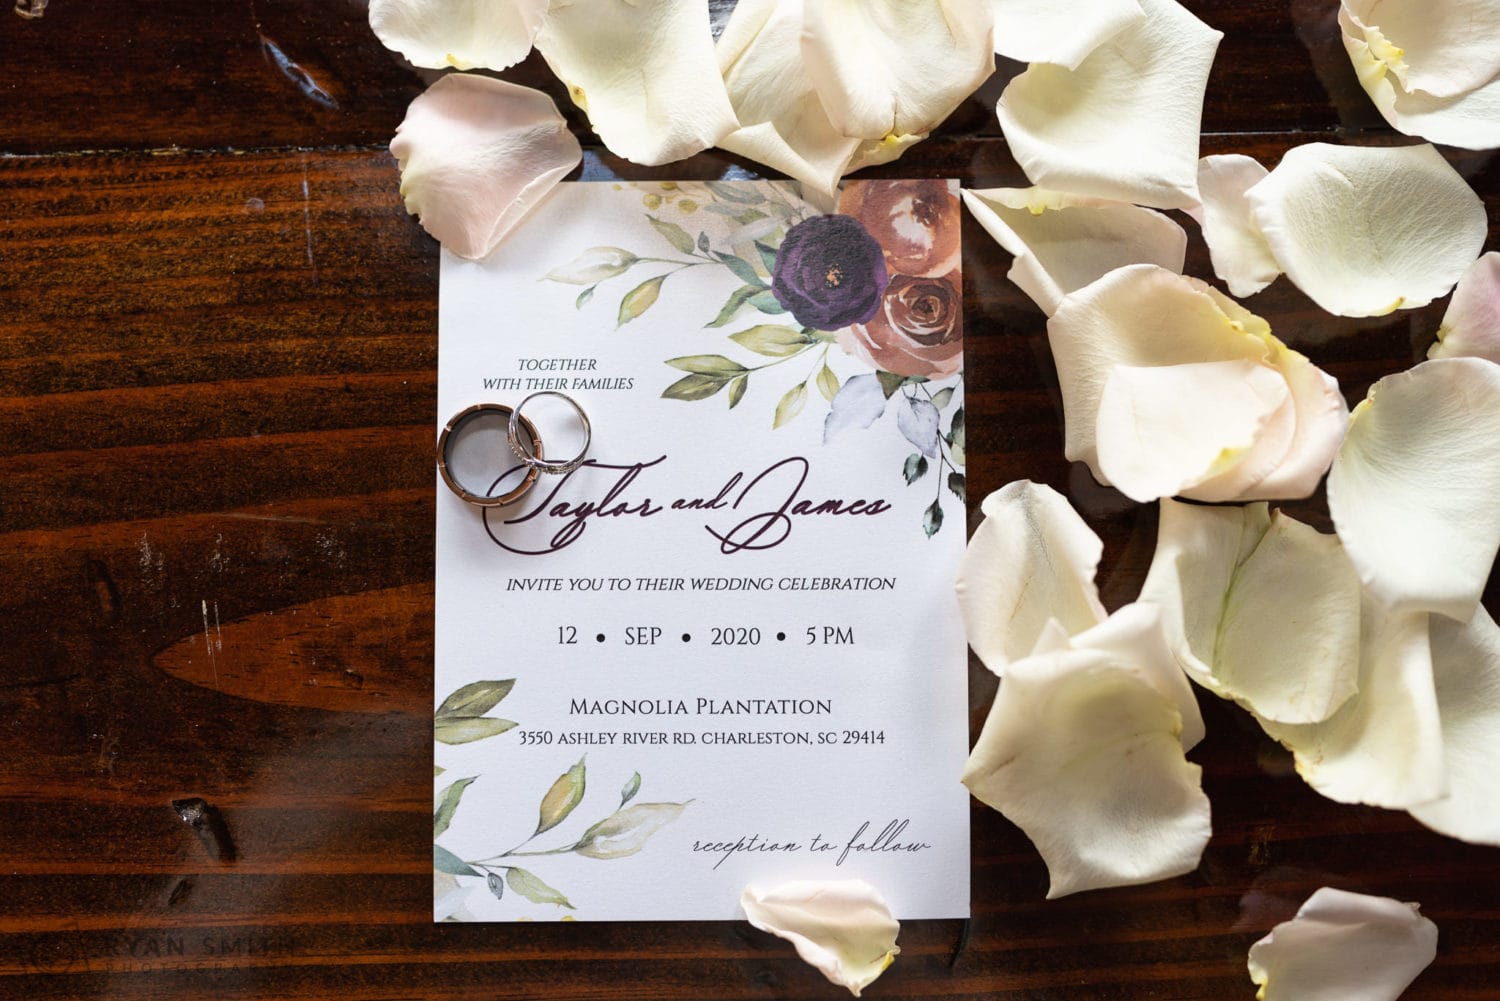 Invitation surrounded by flower petals - Magnolia Plantation - Charleston, SC